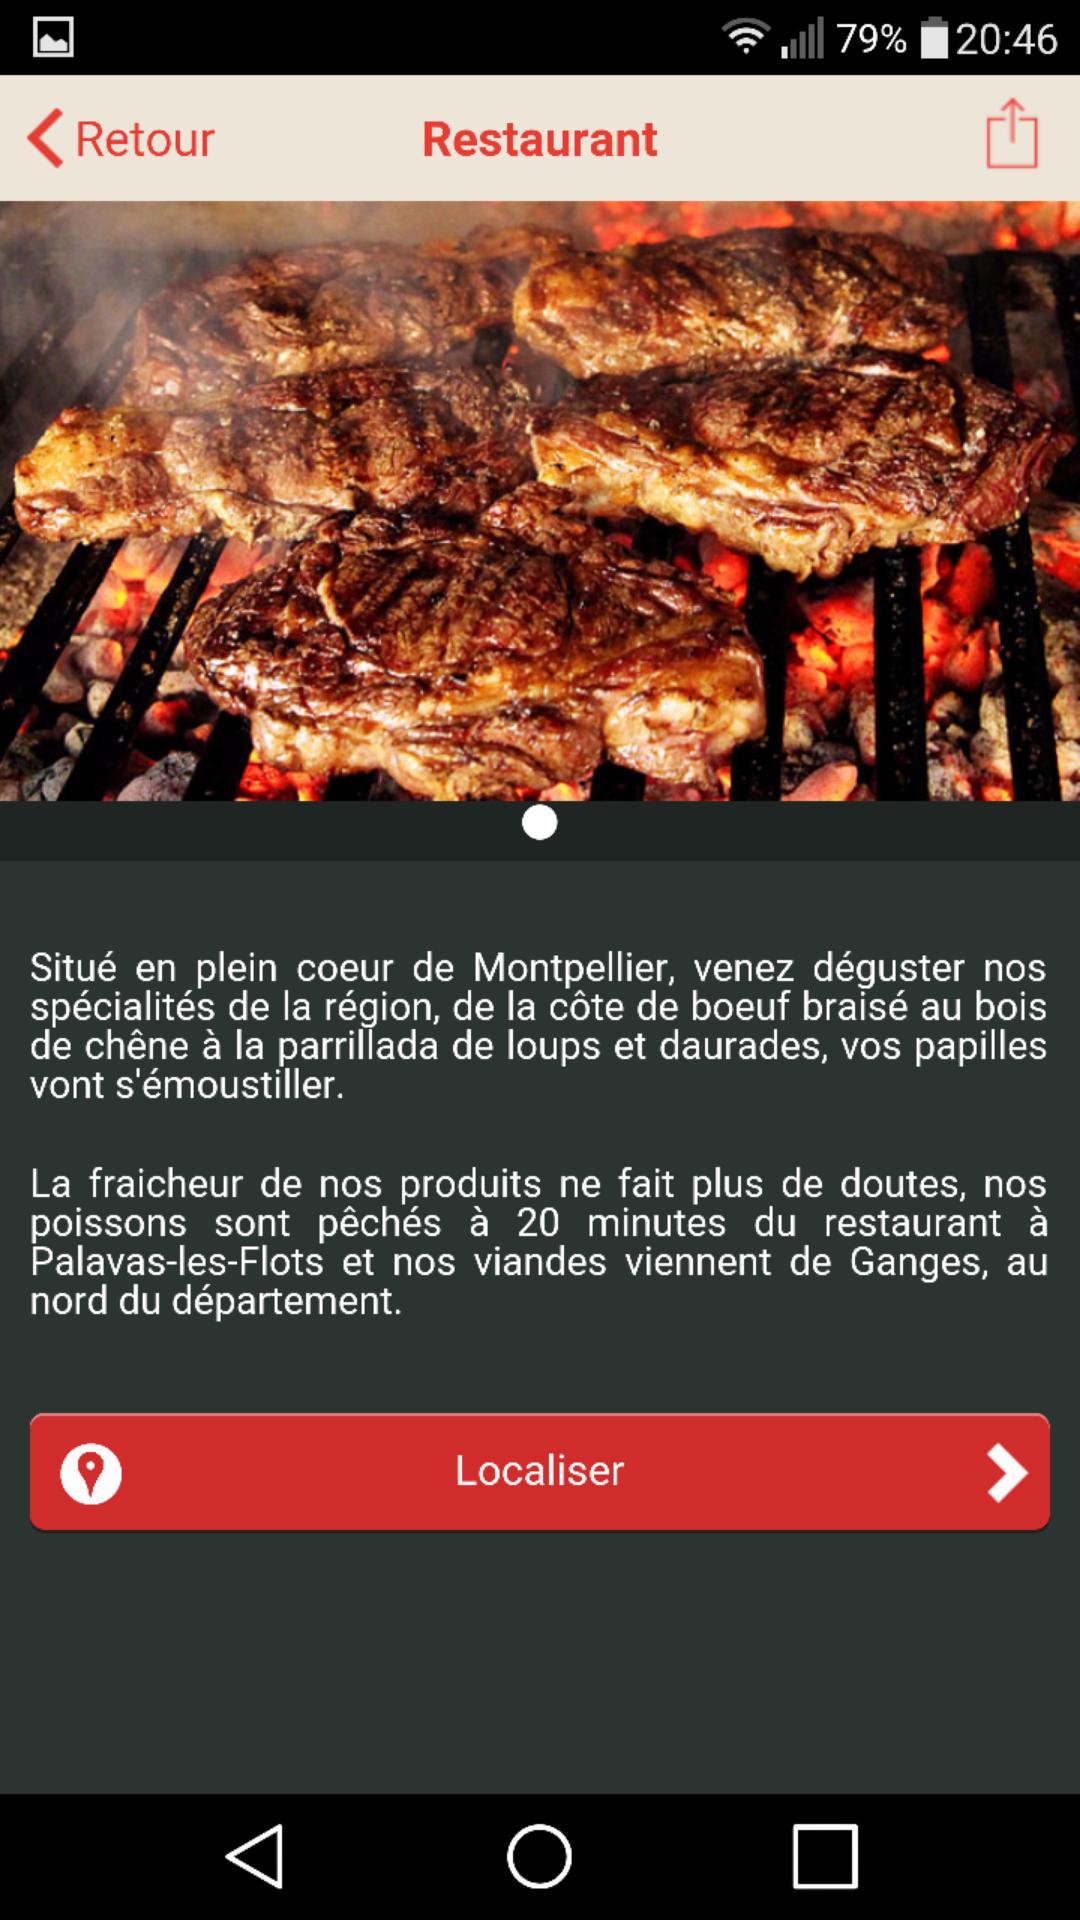 La Fourchette for Android - APK Download